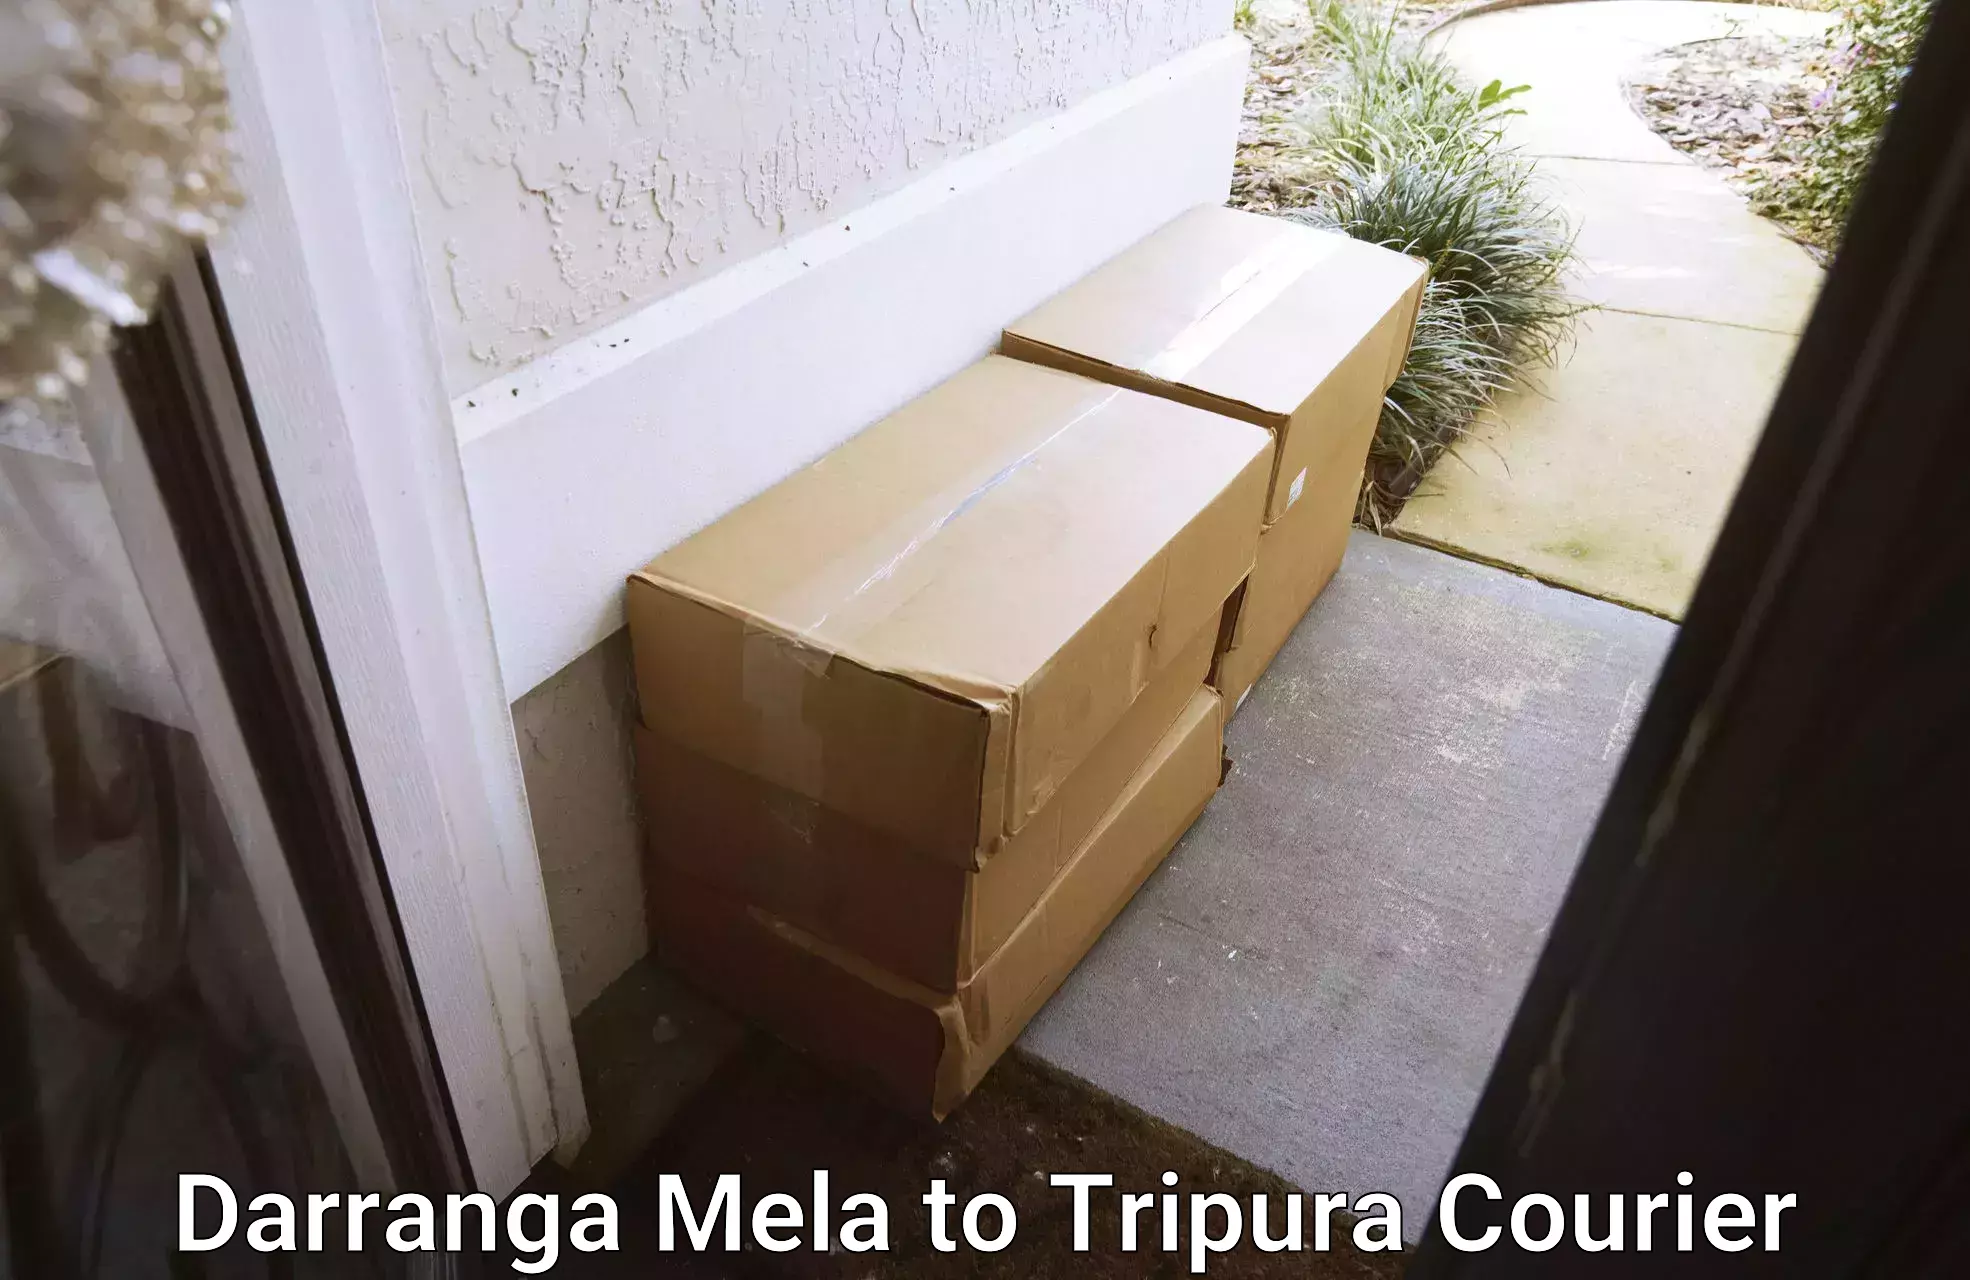 Express courier capabilities in Darranga Mela to Aambasa